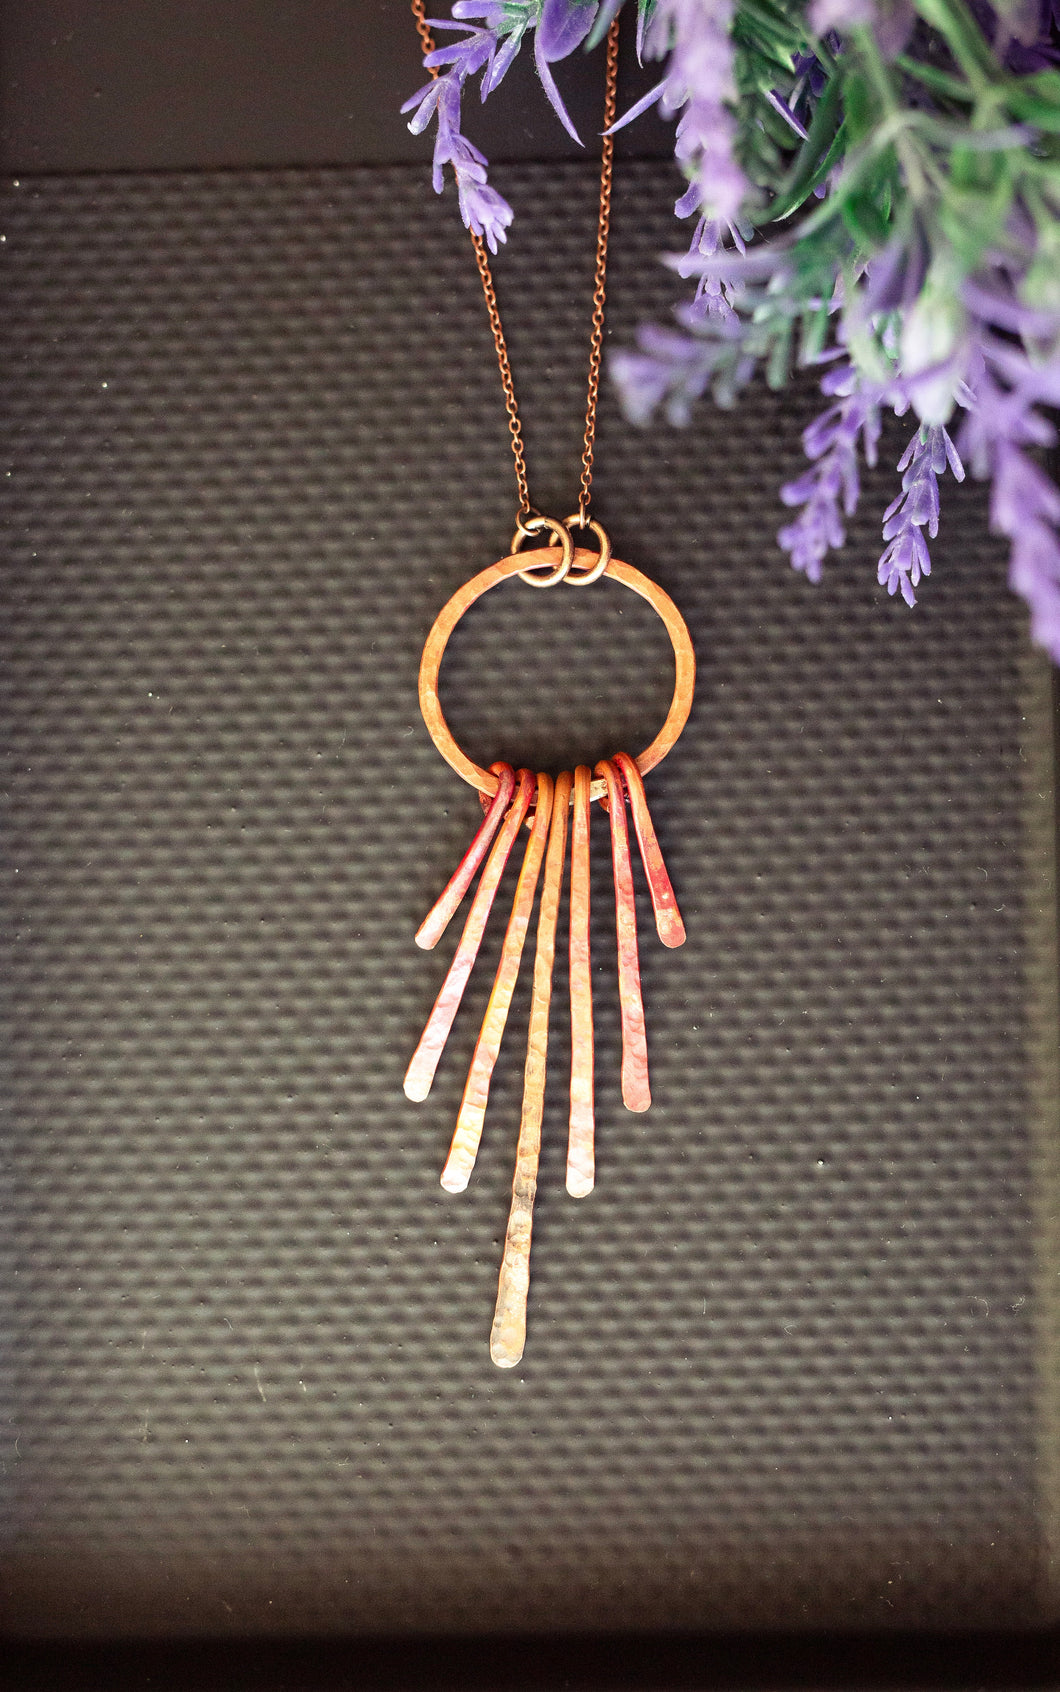 Flamed Graduated Stick Pendant Necklace